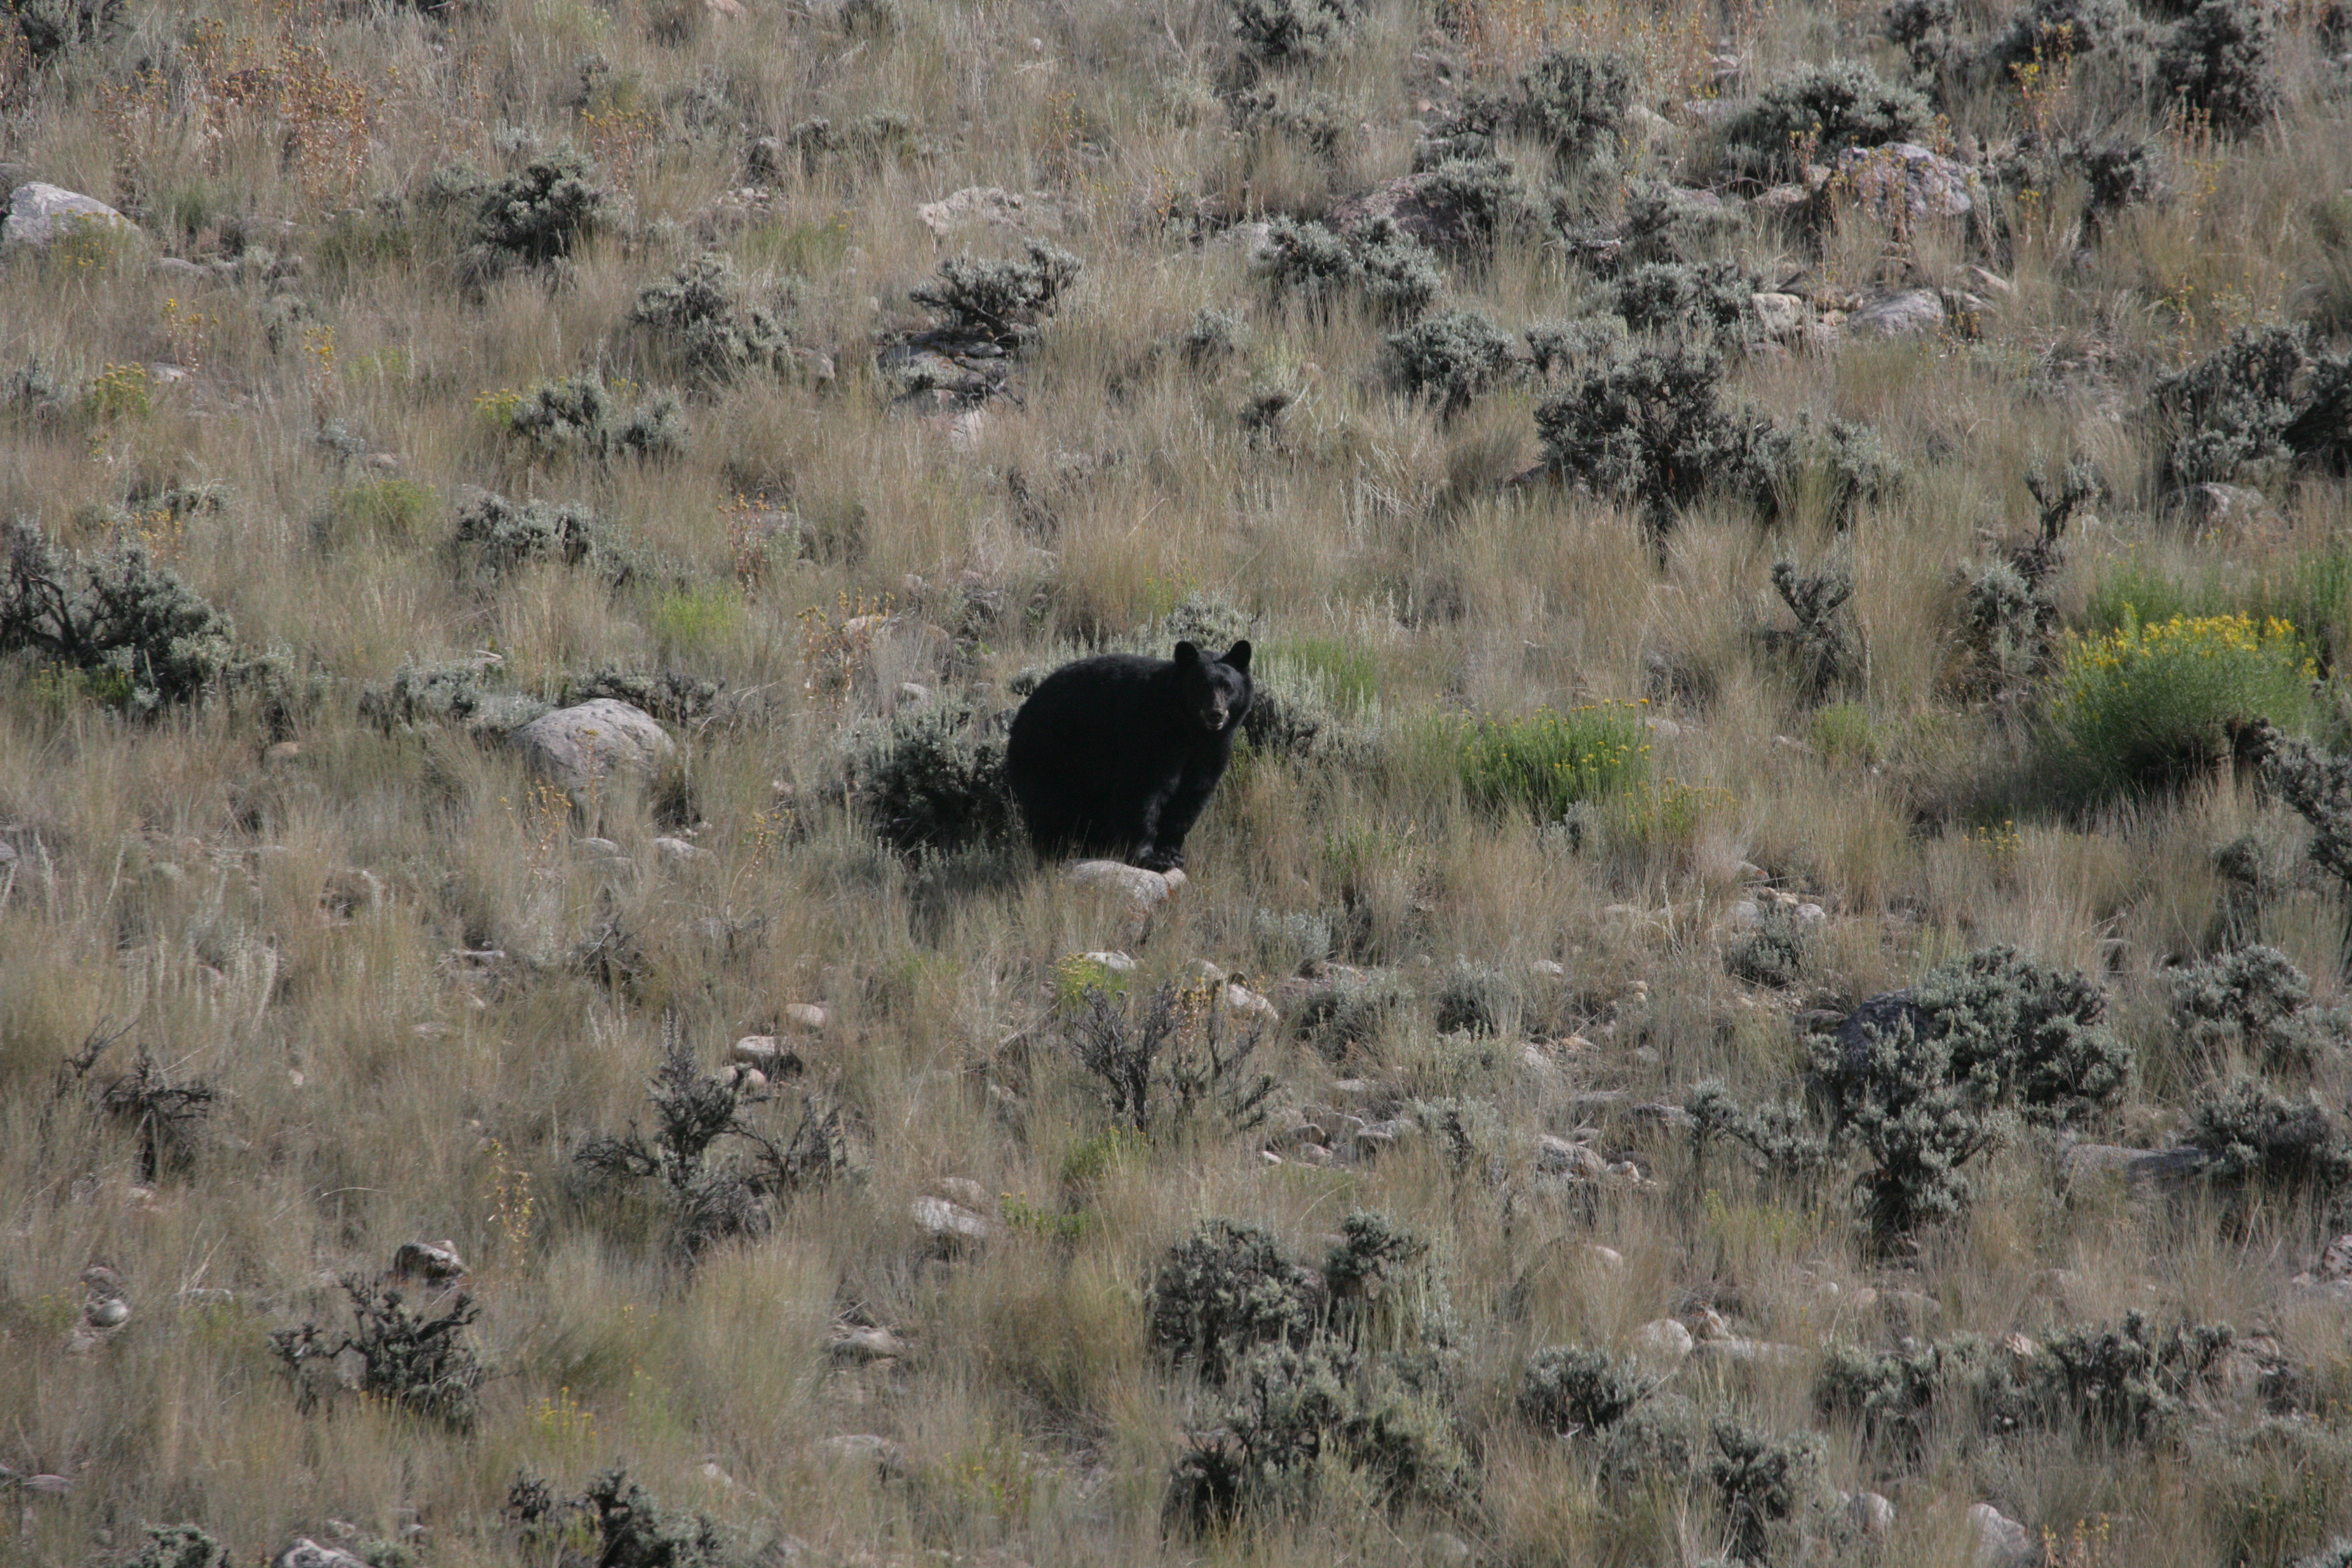 Local Wildlife: Bear detail image